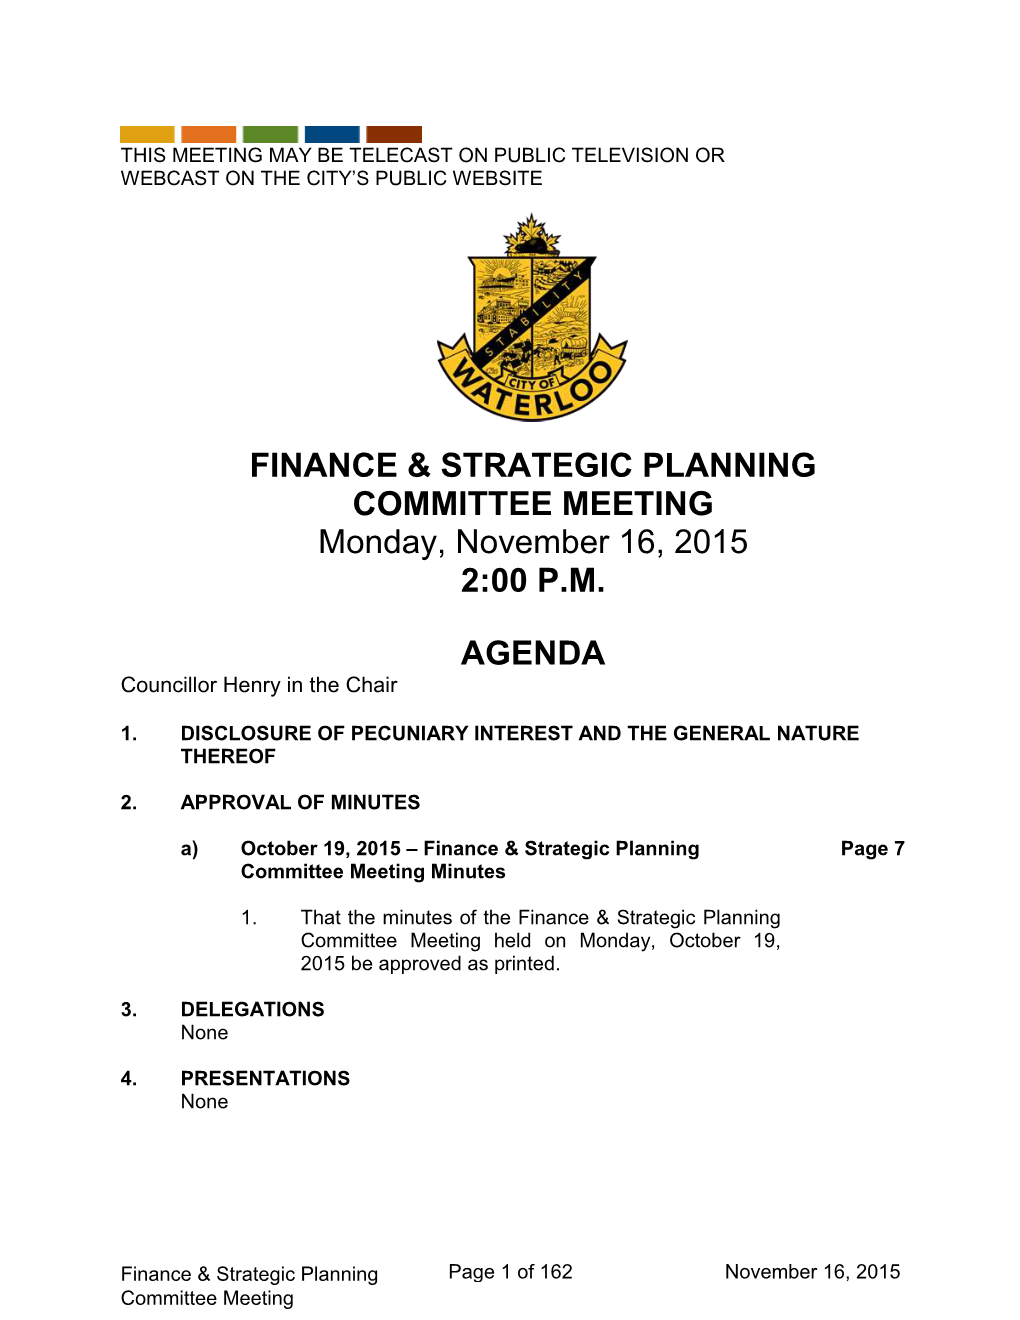 FINANCE & STRATEGIC PLANNING COMMITTEE MEETING Monday, November 16, 2015 2:00 P.M. AGENDA